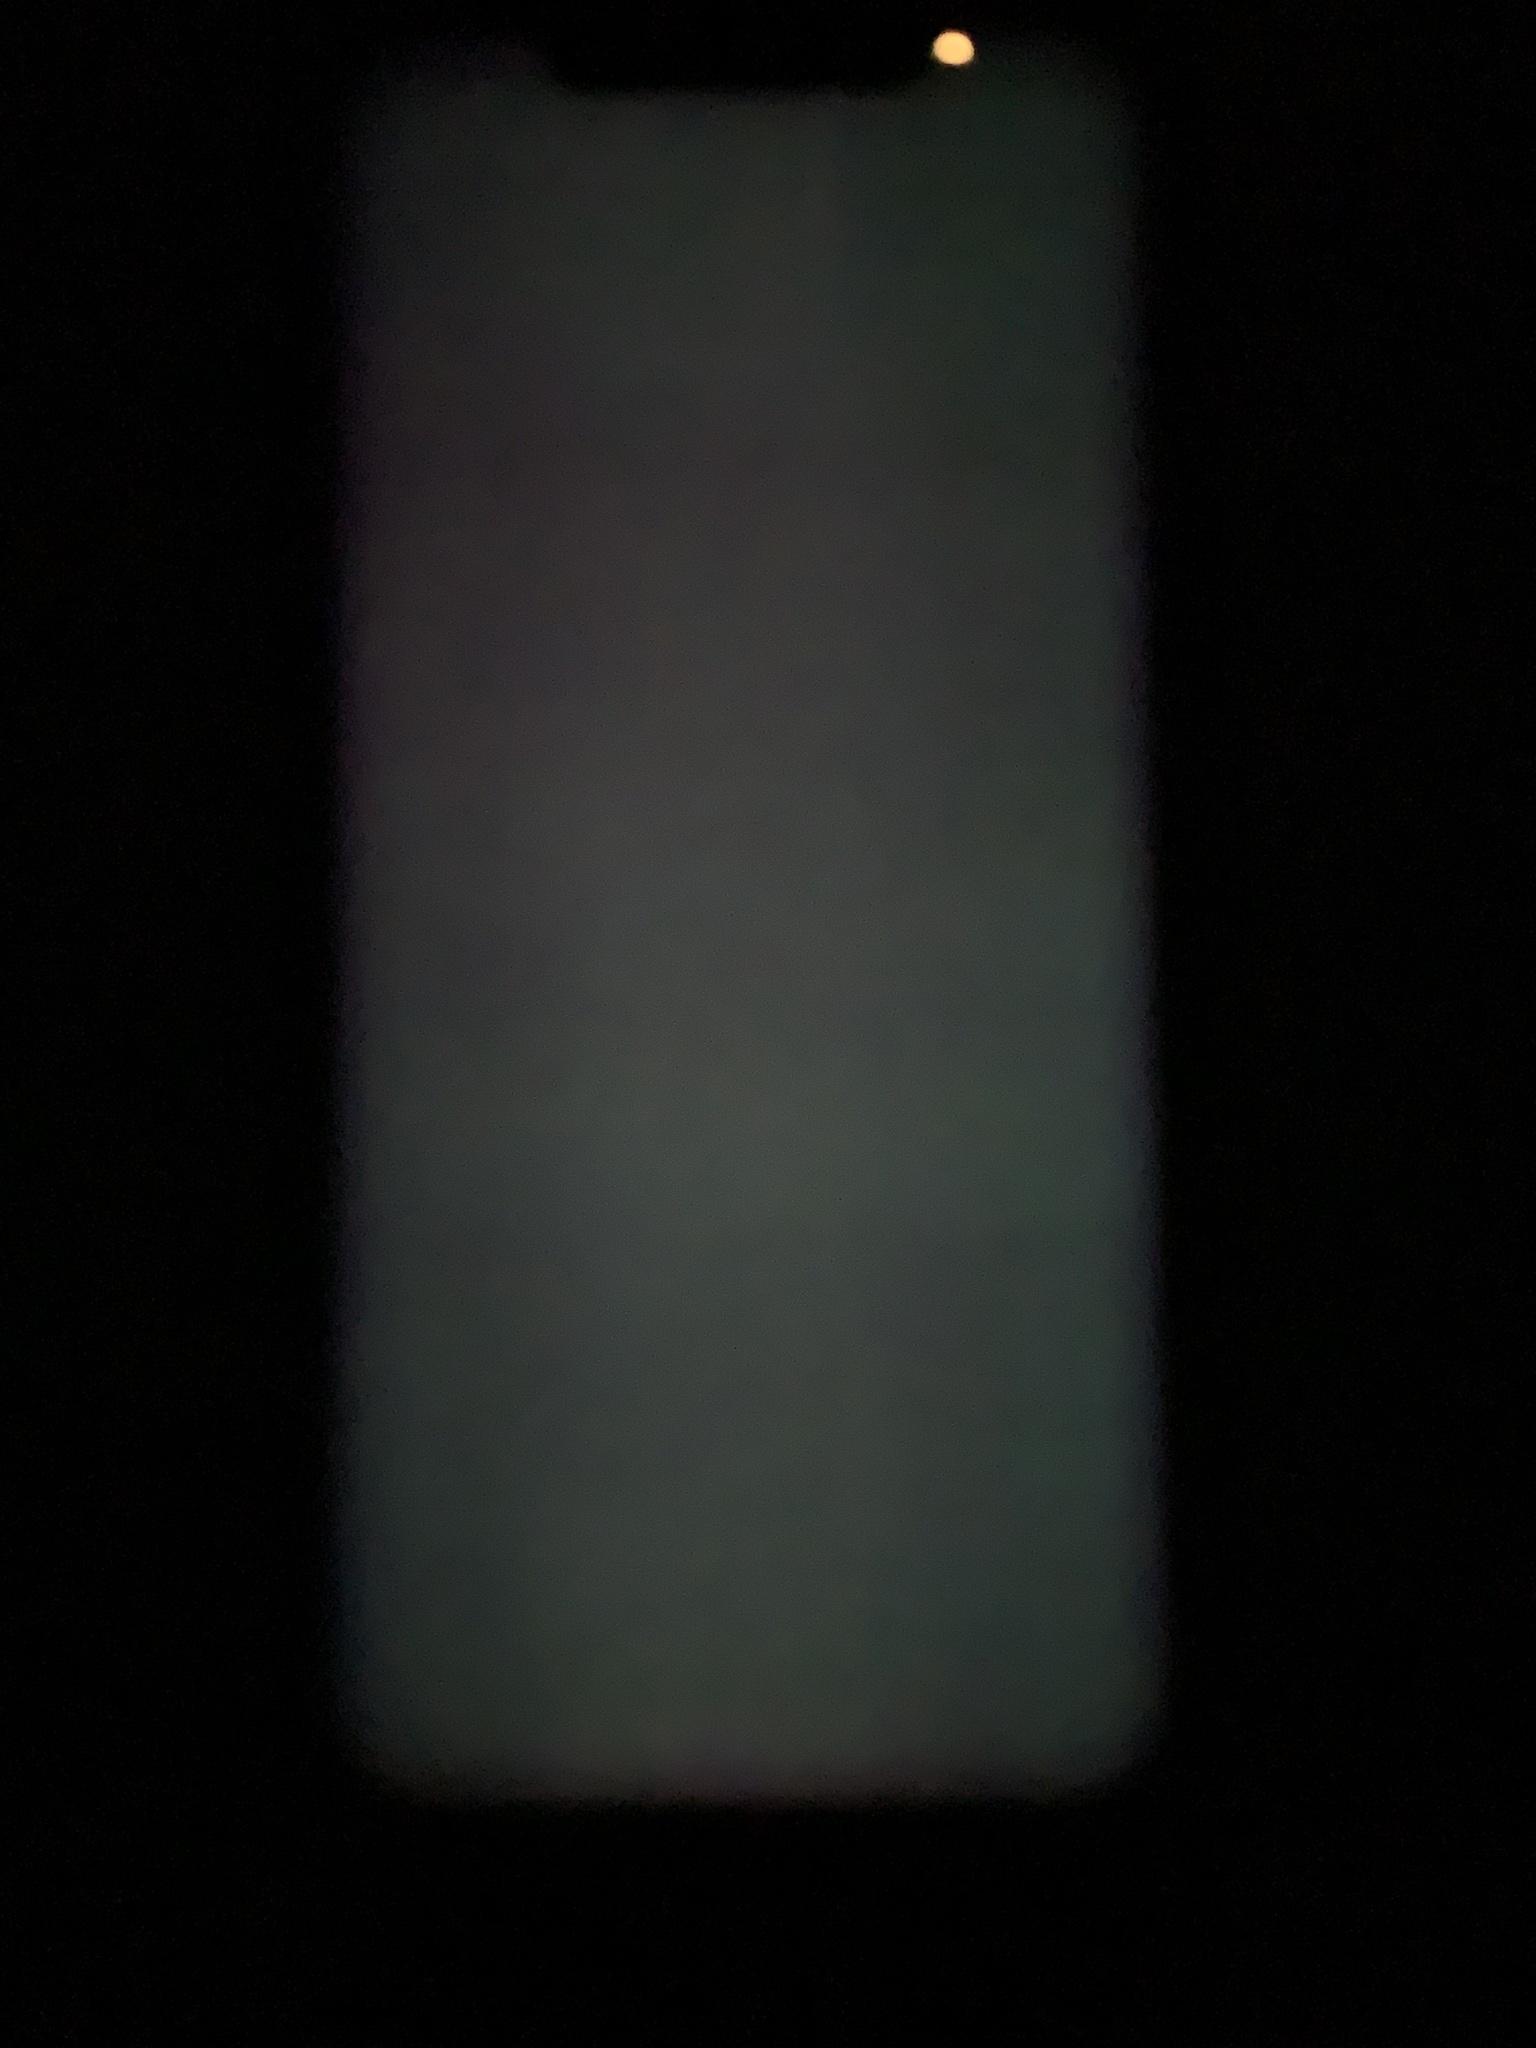 IPhone 12 Pro Max OLED Black Wallpaper Grey Screen